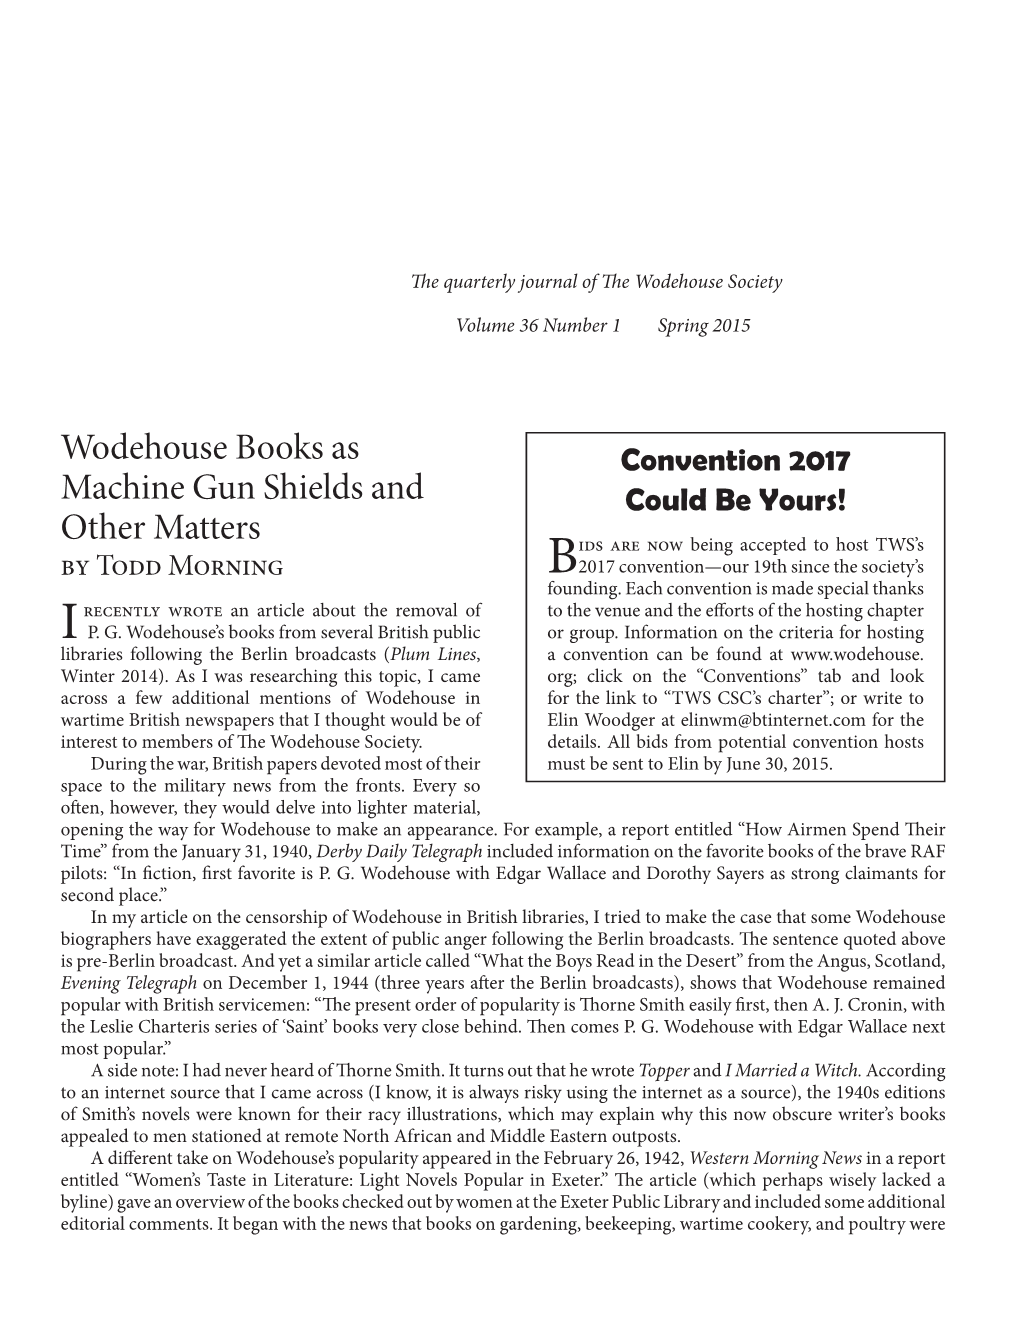 Wodehouse Books As Machine Gun Shields and Other Matters